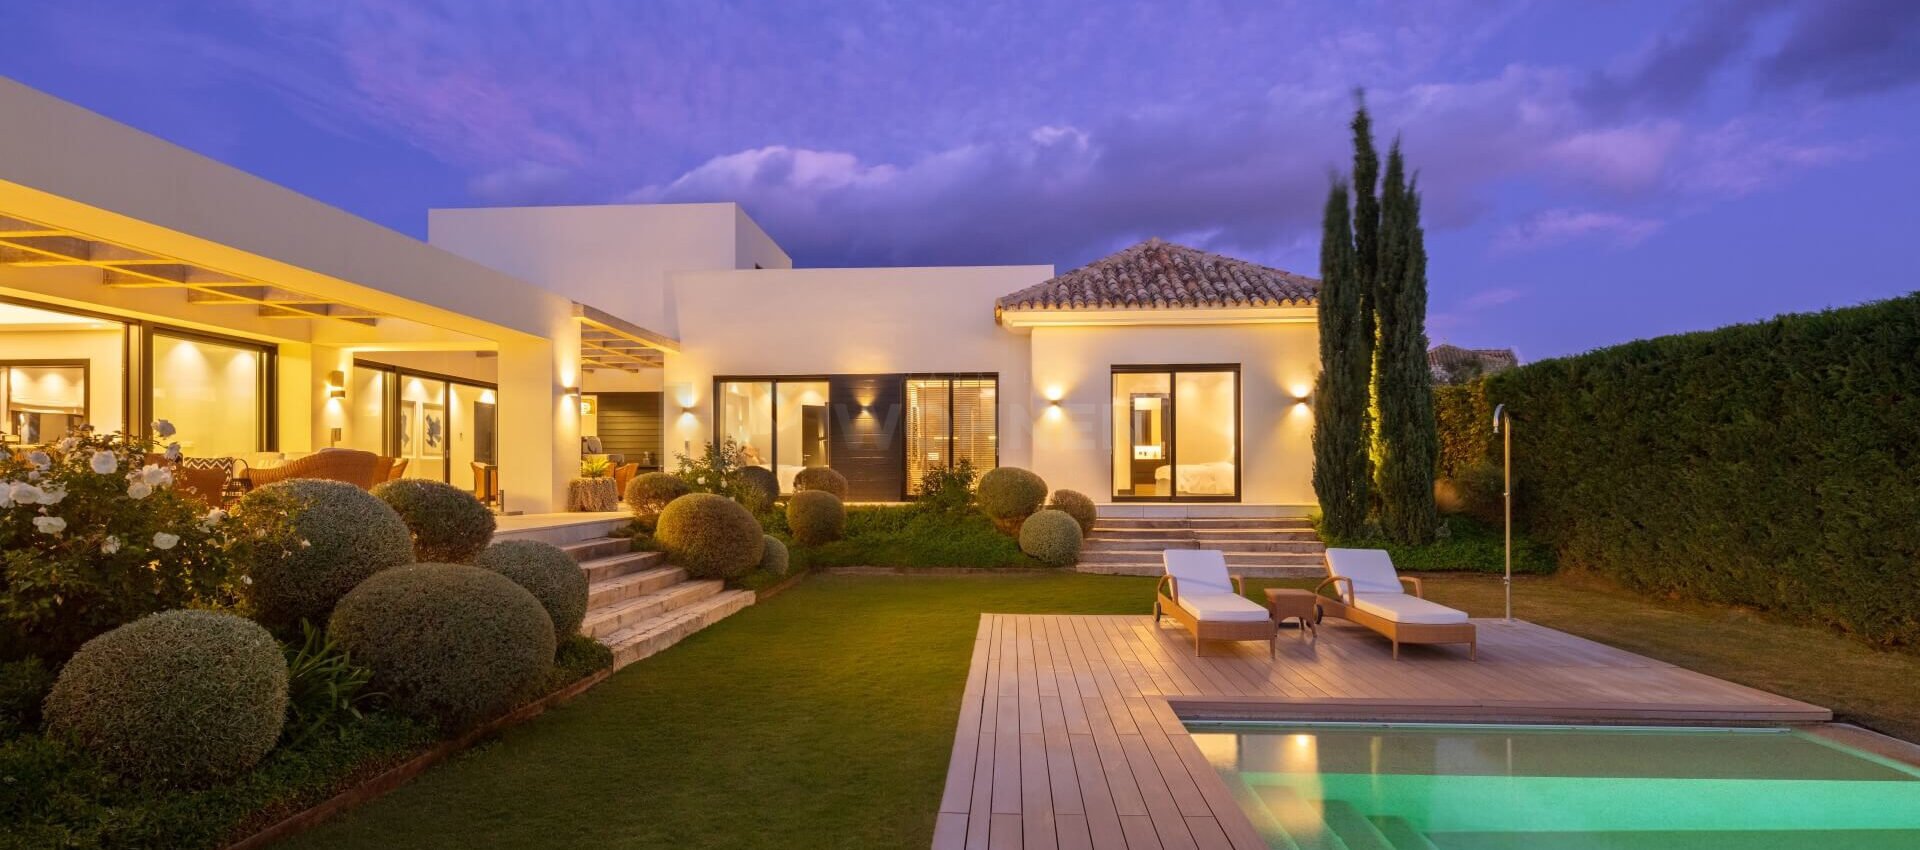 Villa im mediterranen Stil mit atemberaubendem Meerblick